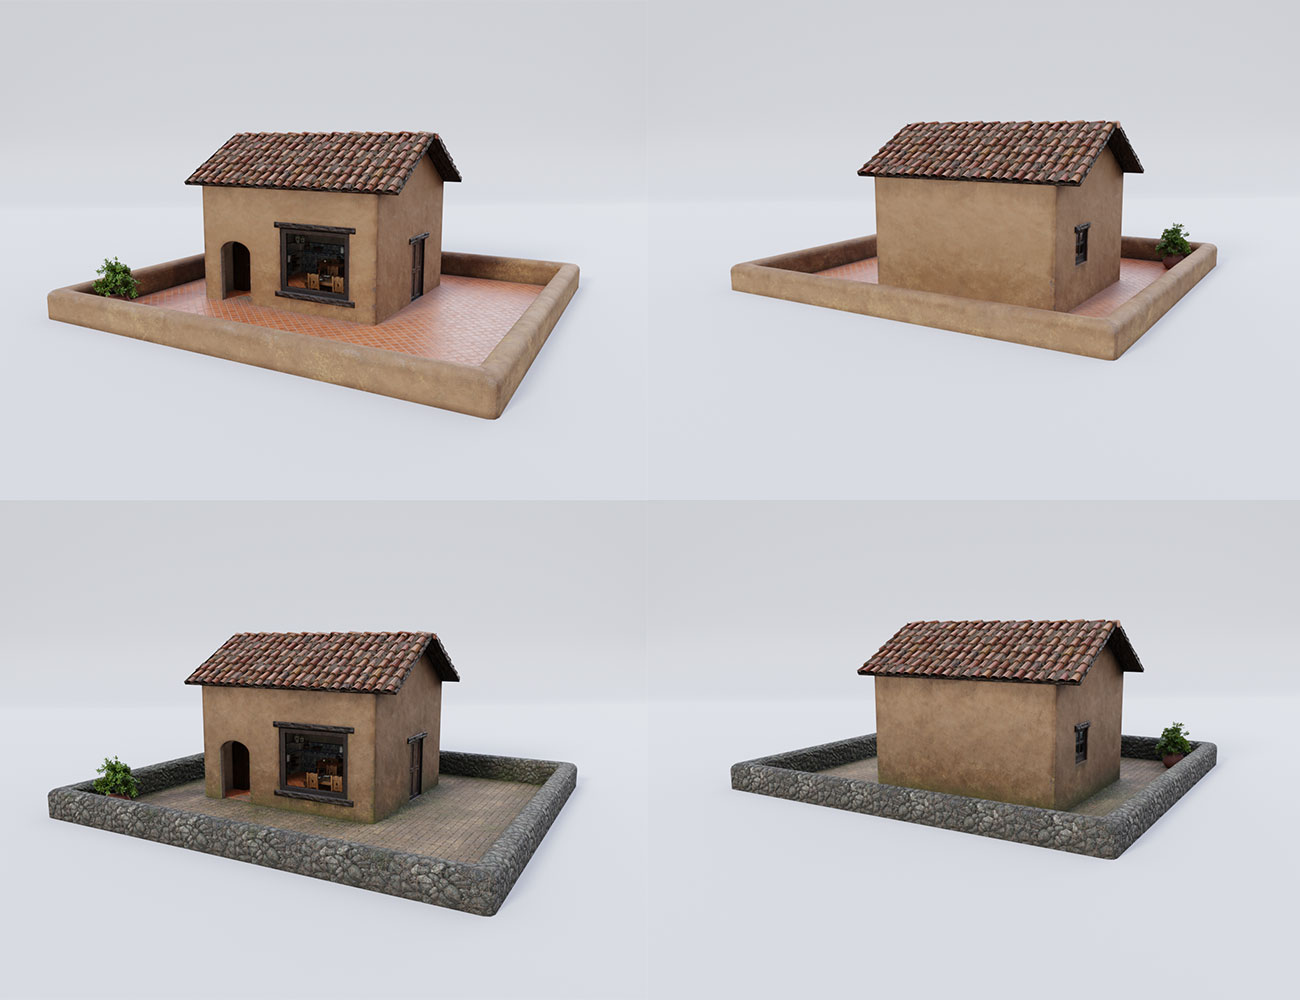 Hacienda Kitchen by: Hypertaf, 3D Models by Daz 3D